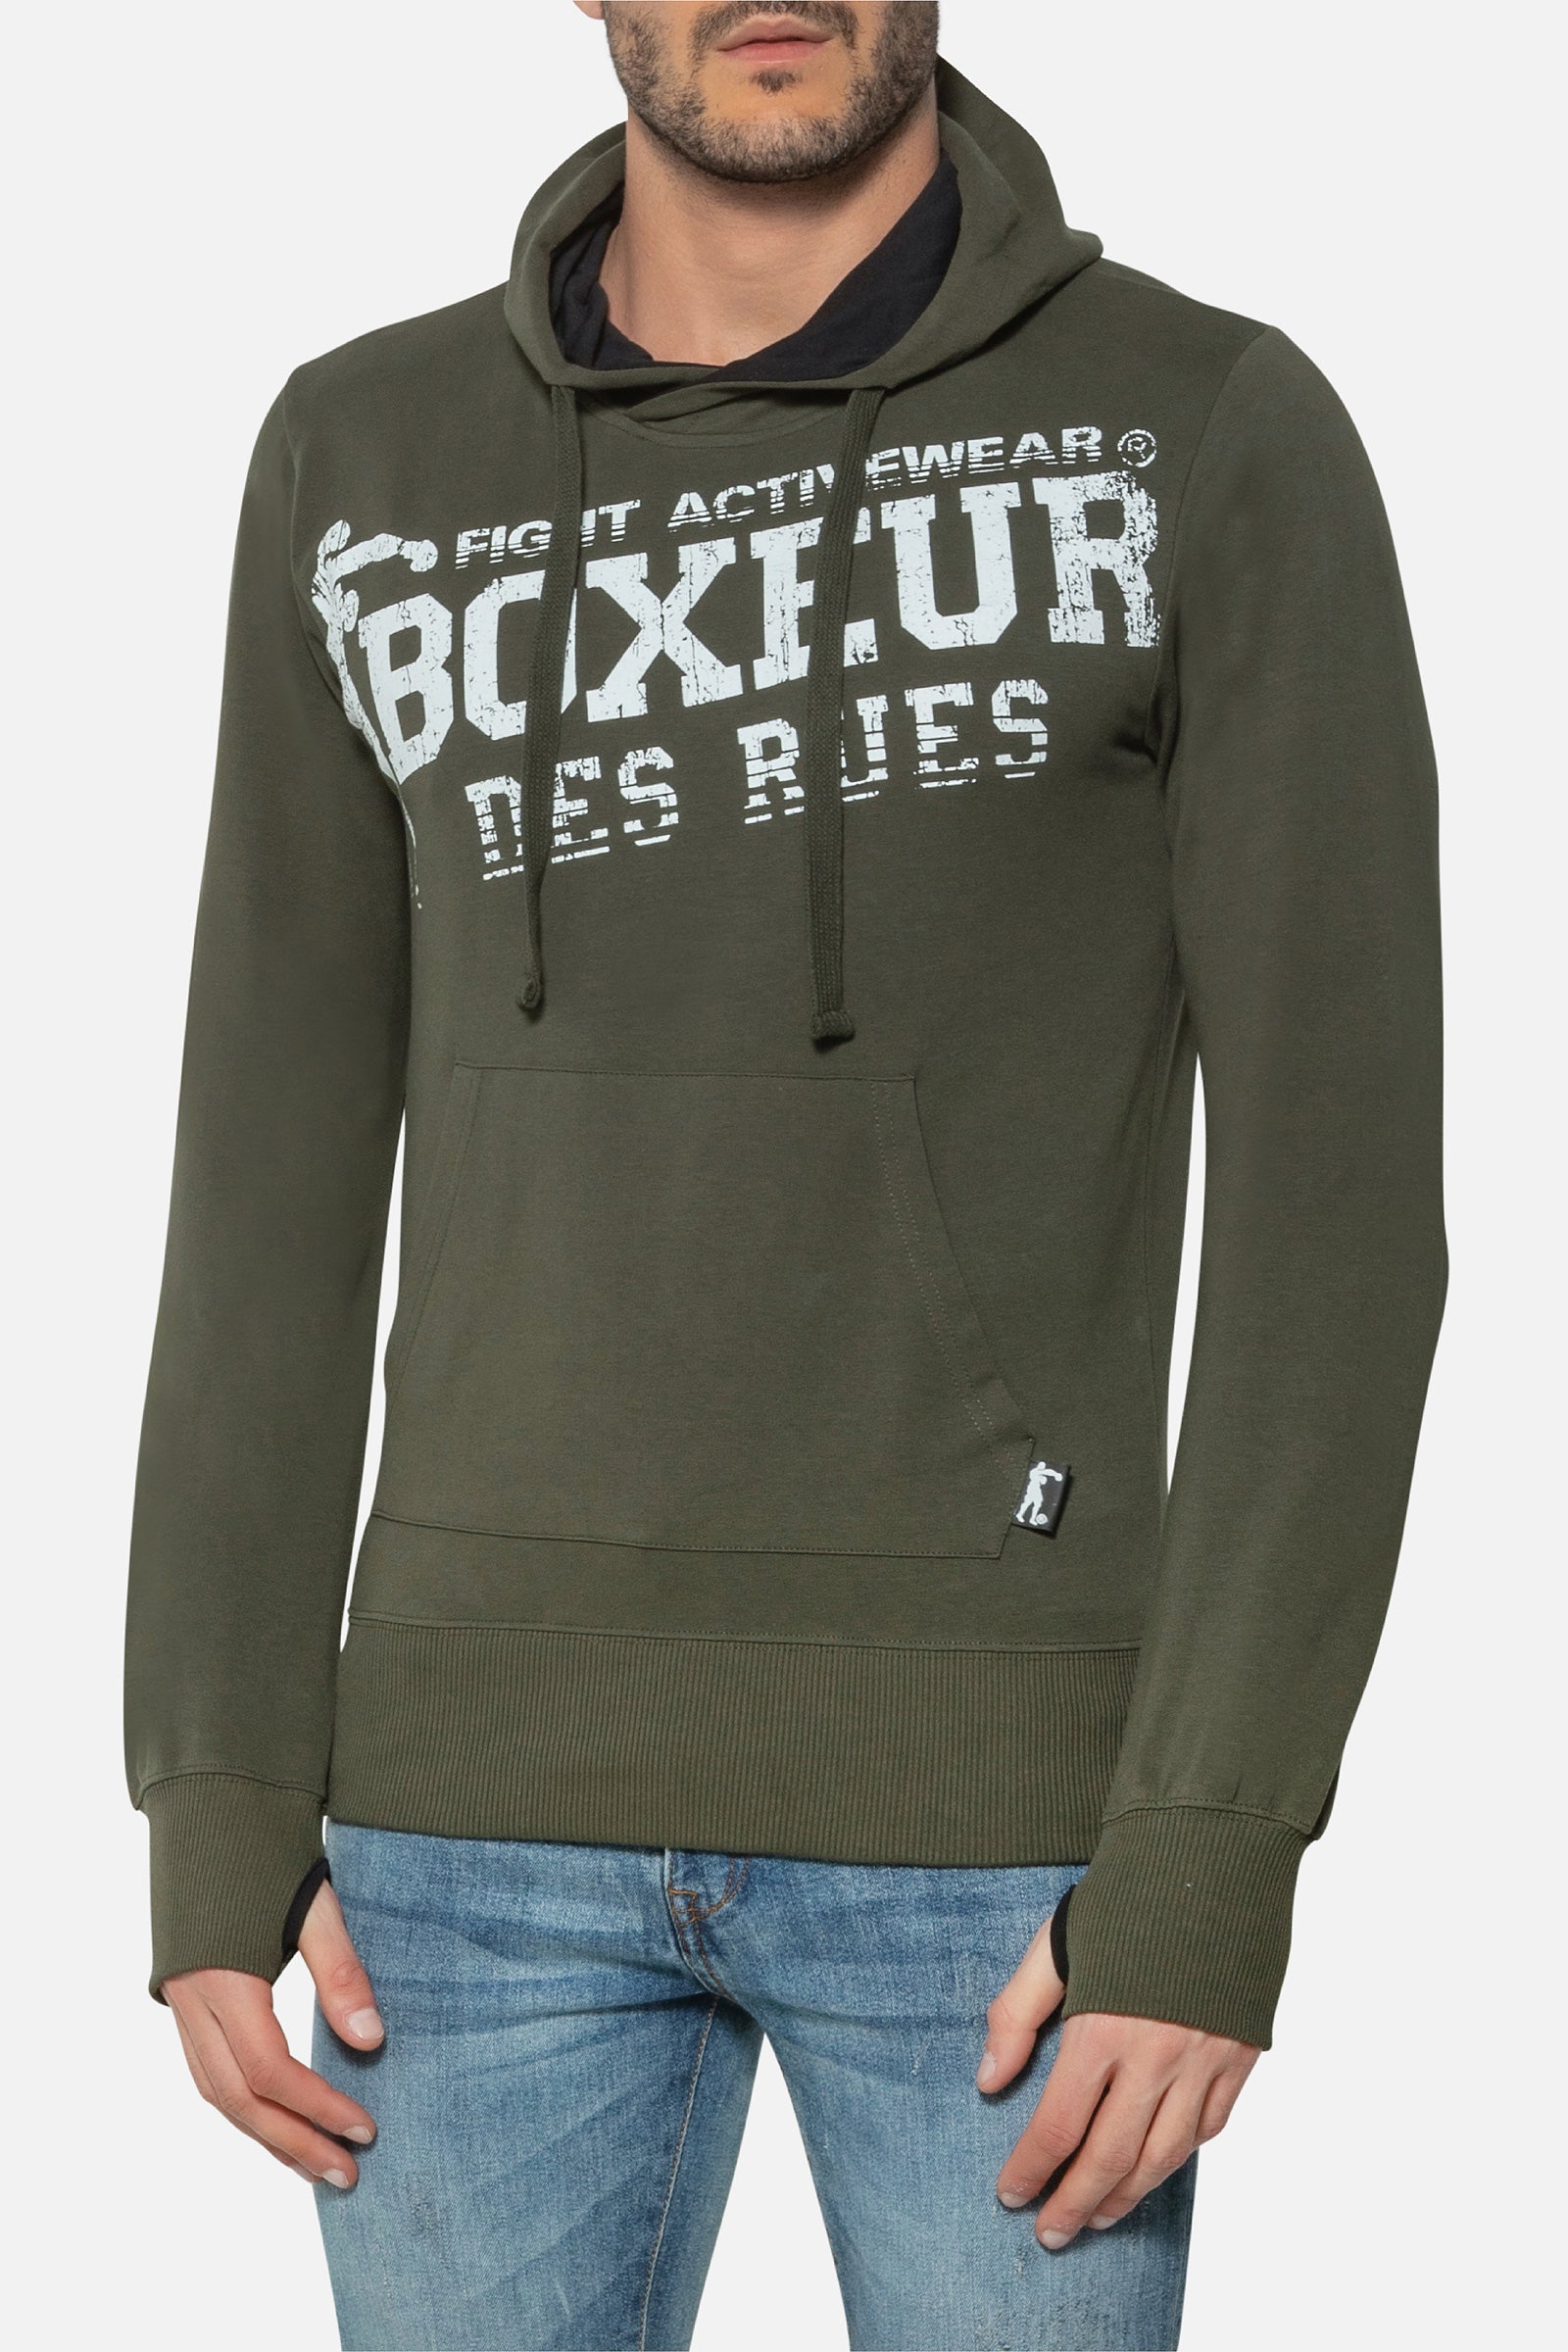 Hooded Sweatshirt with Thumb Openings in Army Kapuzenpullover Boxeur des Rues   